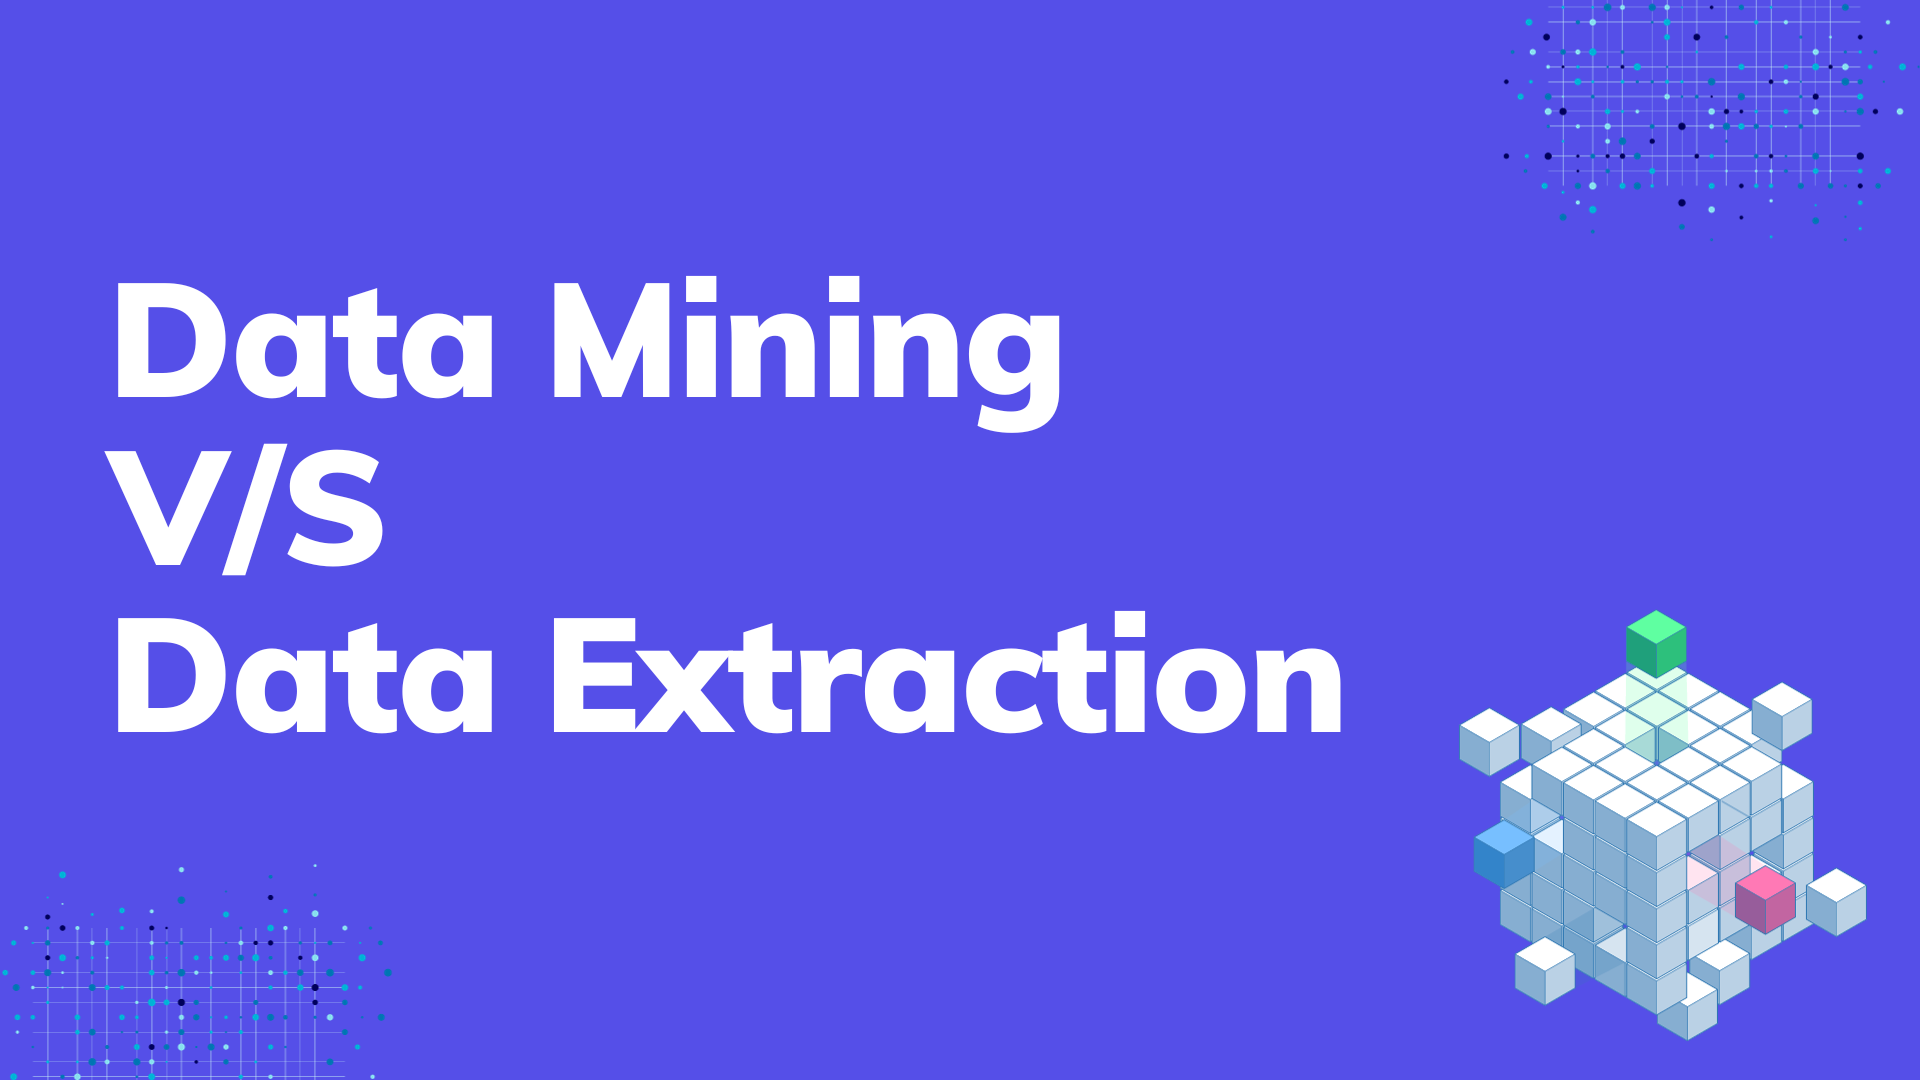 Data Mining V/S Data Extraction